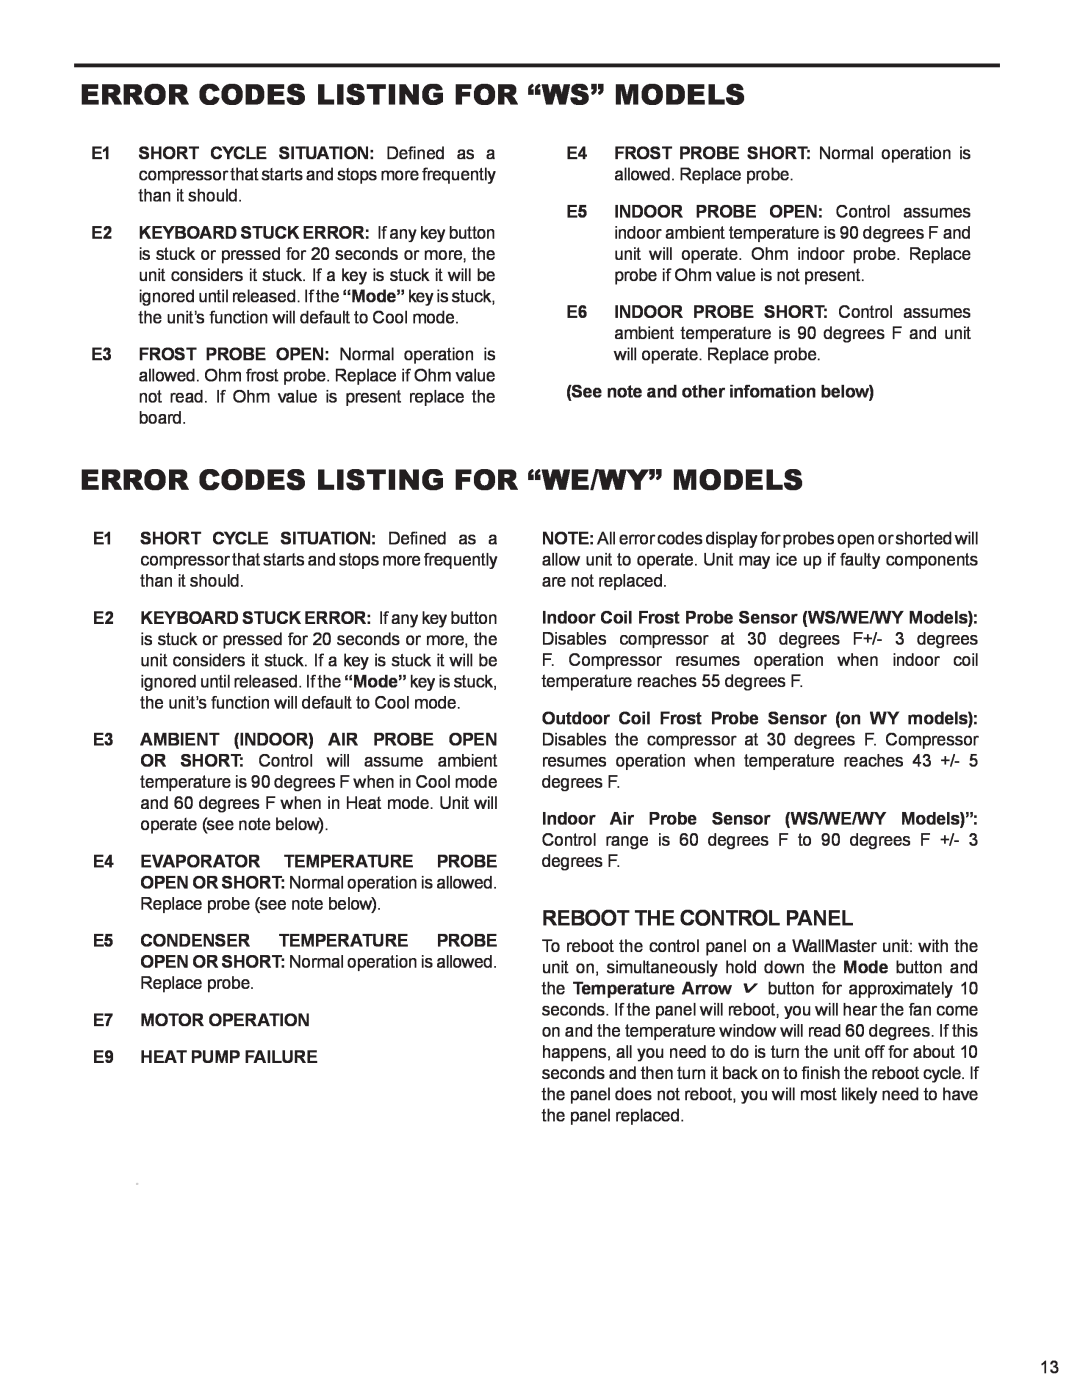 Friedrich 2009, 2008 Error Codes Listing For “Ws” Models, Error Codes Listing For “We/Wy” Models, Reboot The Control Panel 